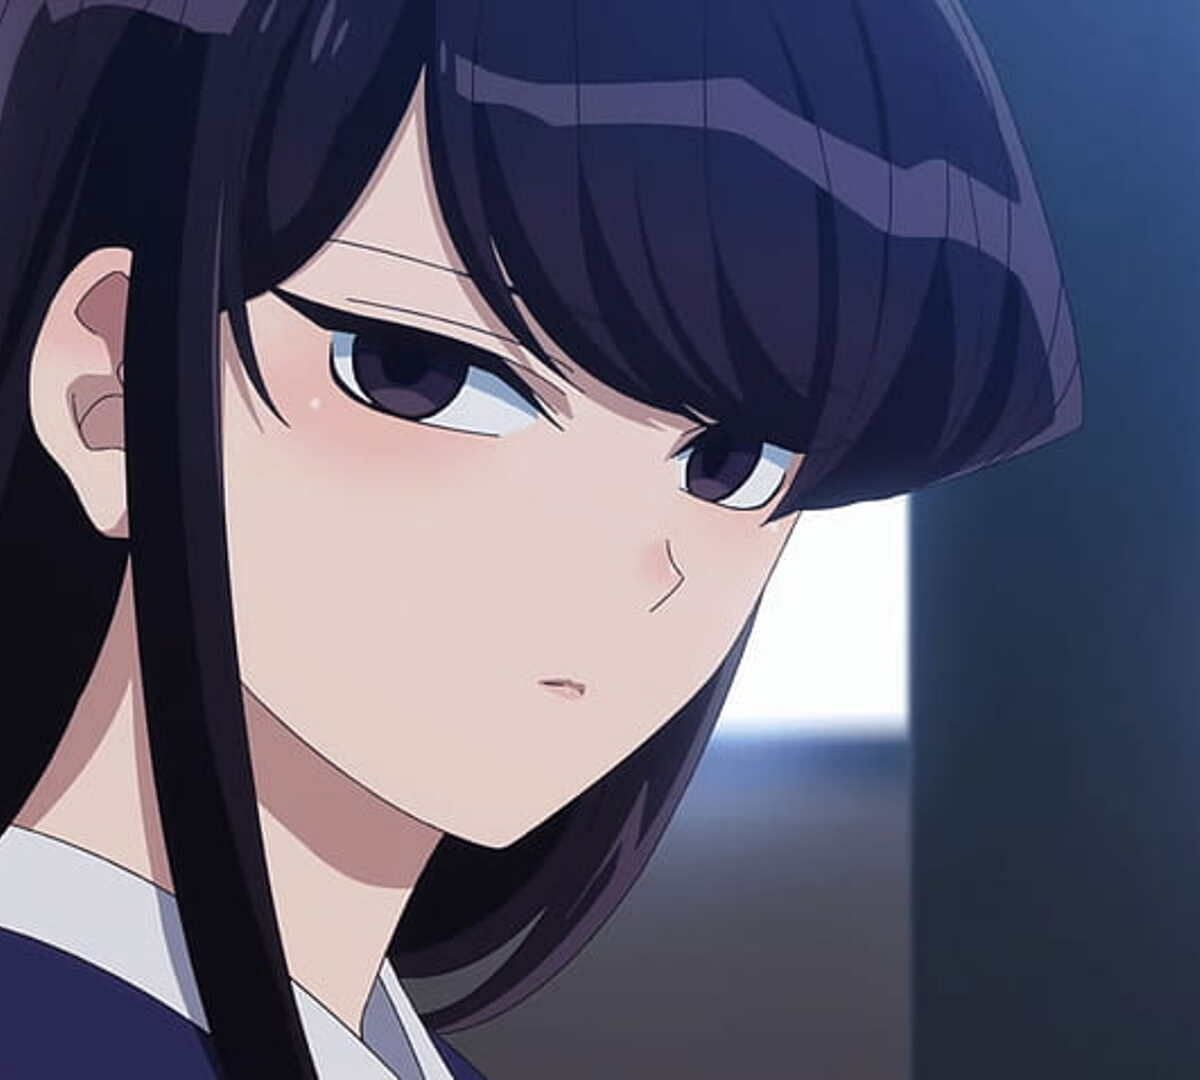 Komi Shouko as seen in the anime (Image via OLM, Inc)